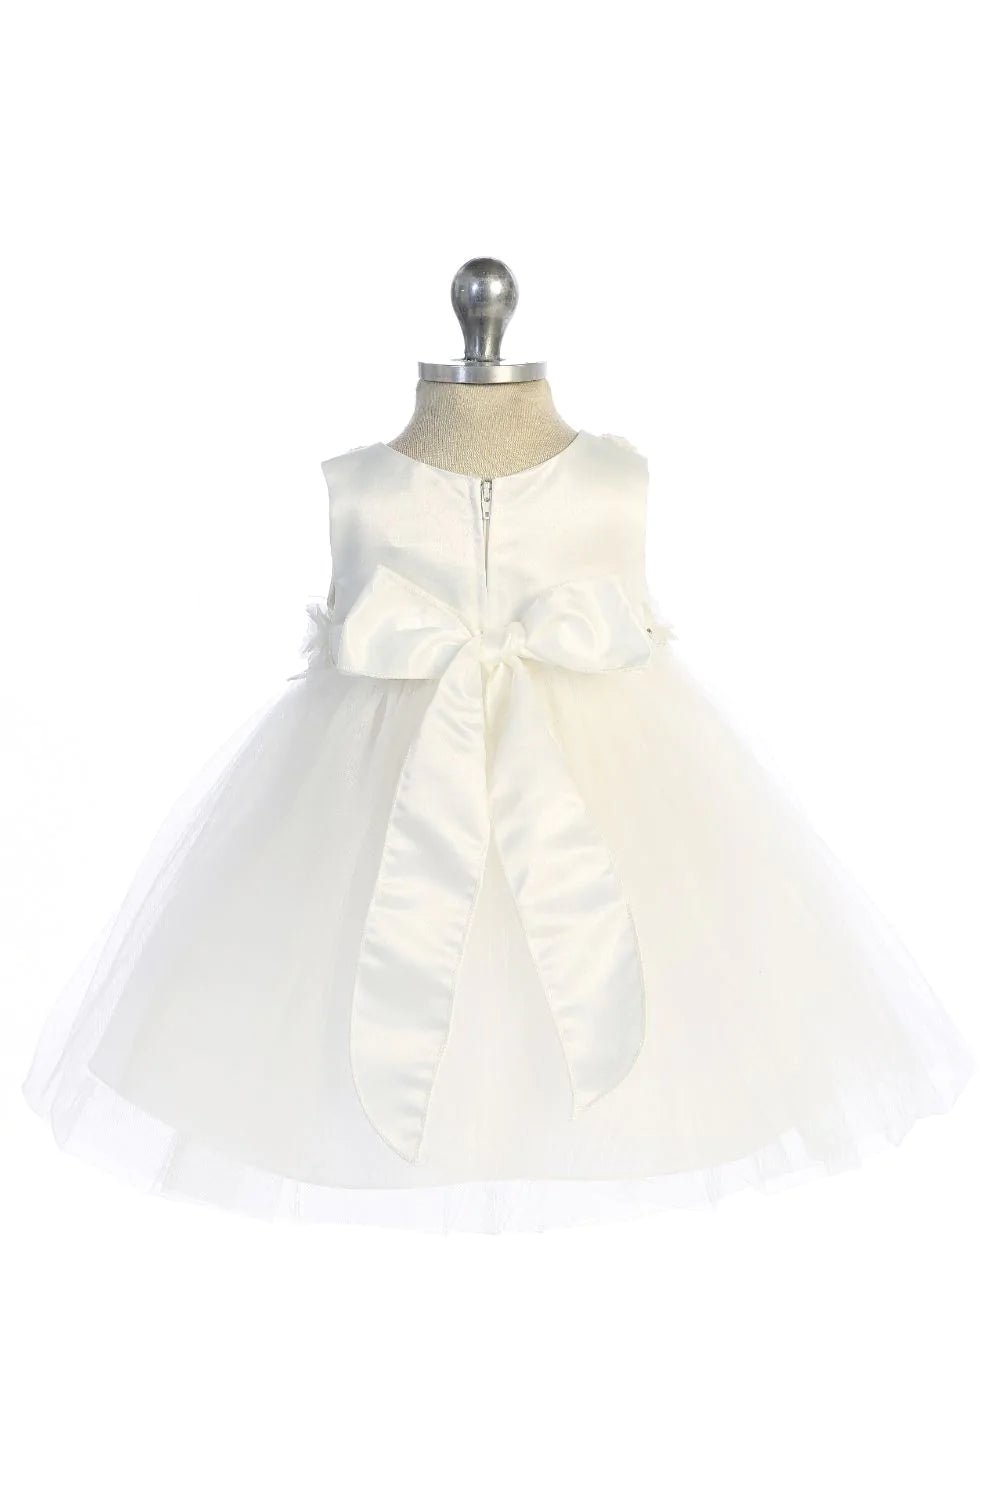 534-Princess Ballgown Baby Dress w/ Floral Trim